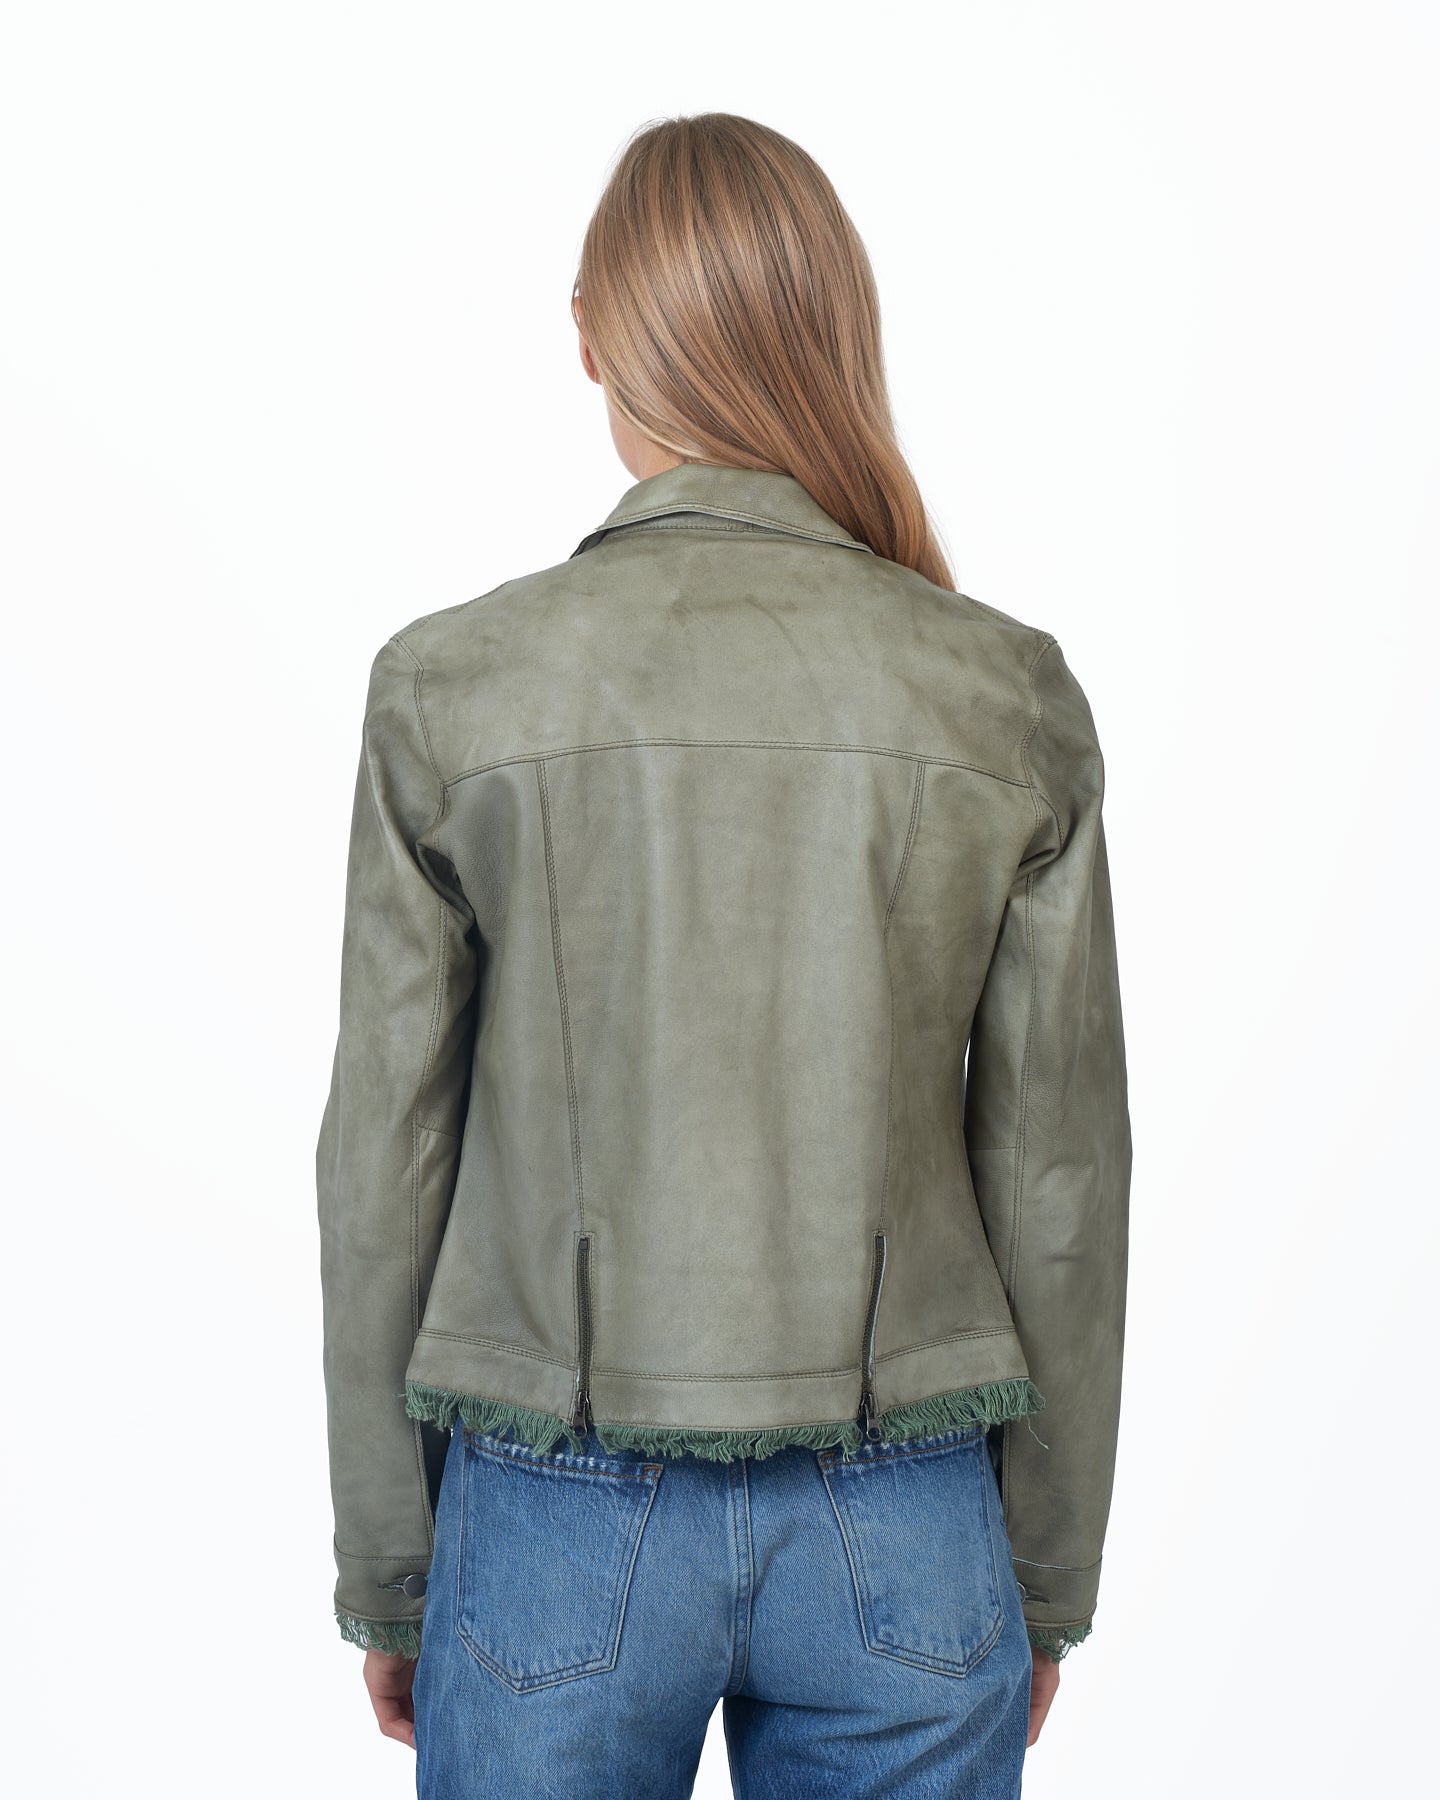 Vintage U.S Army leather jacket – The Era NYC